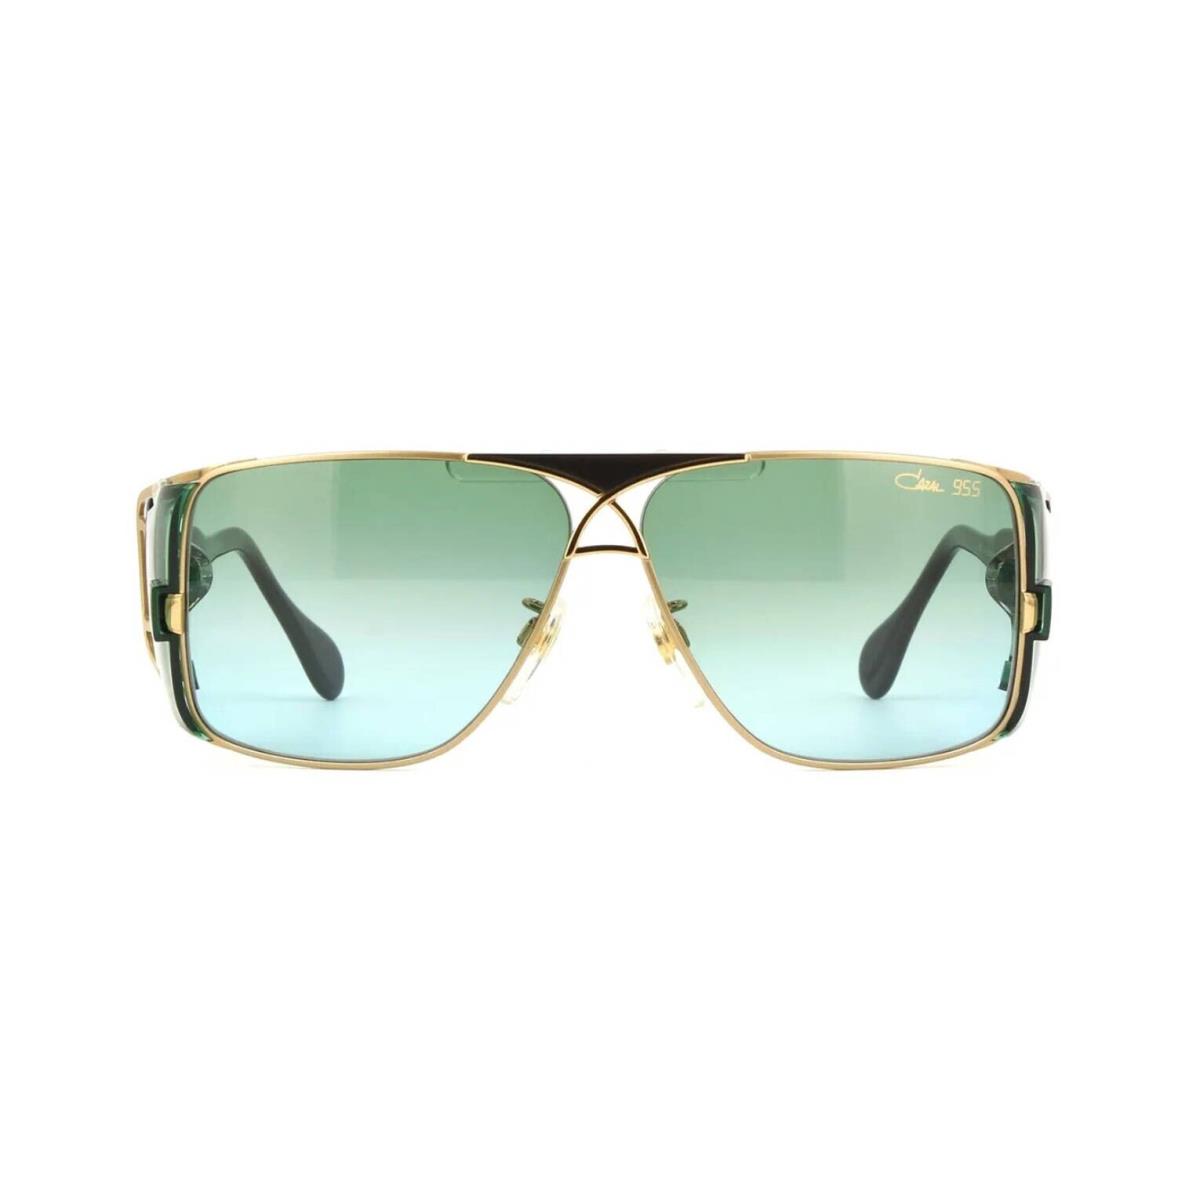 Cazal Legends 955 Matte Black Green/green Shaded 011 Sunglasses - Frame: Matte Black Green, Lens: Green Shaded